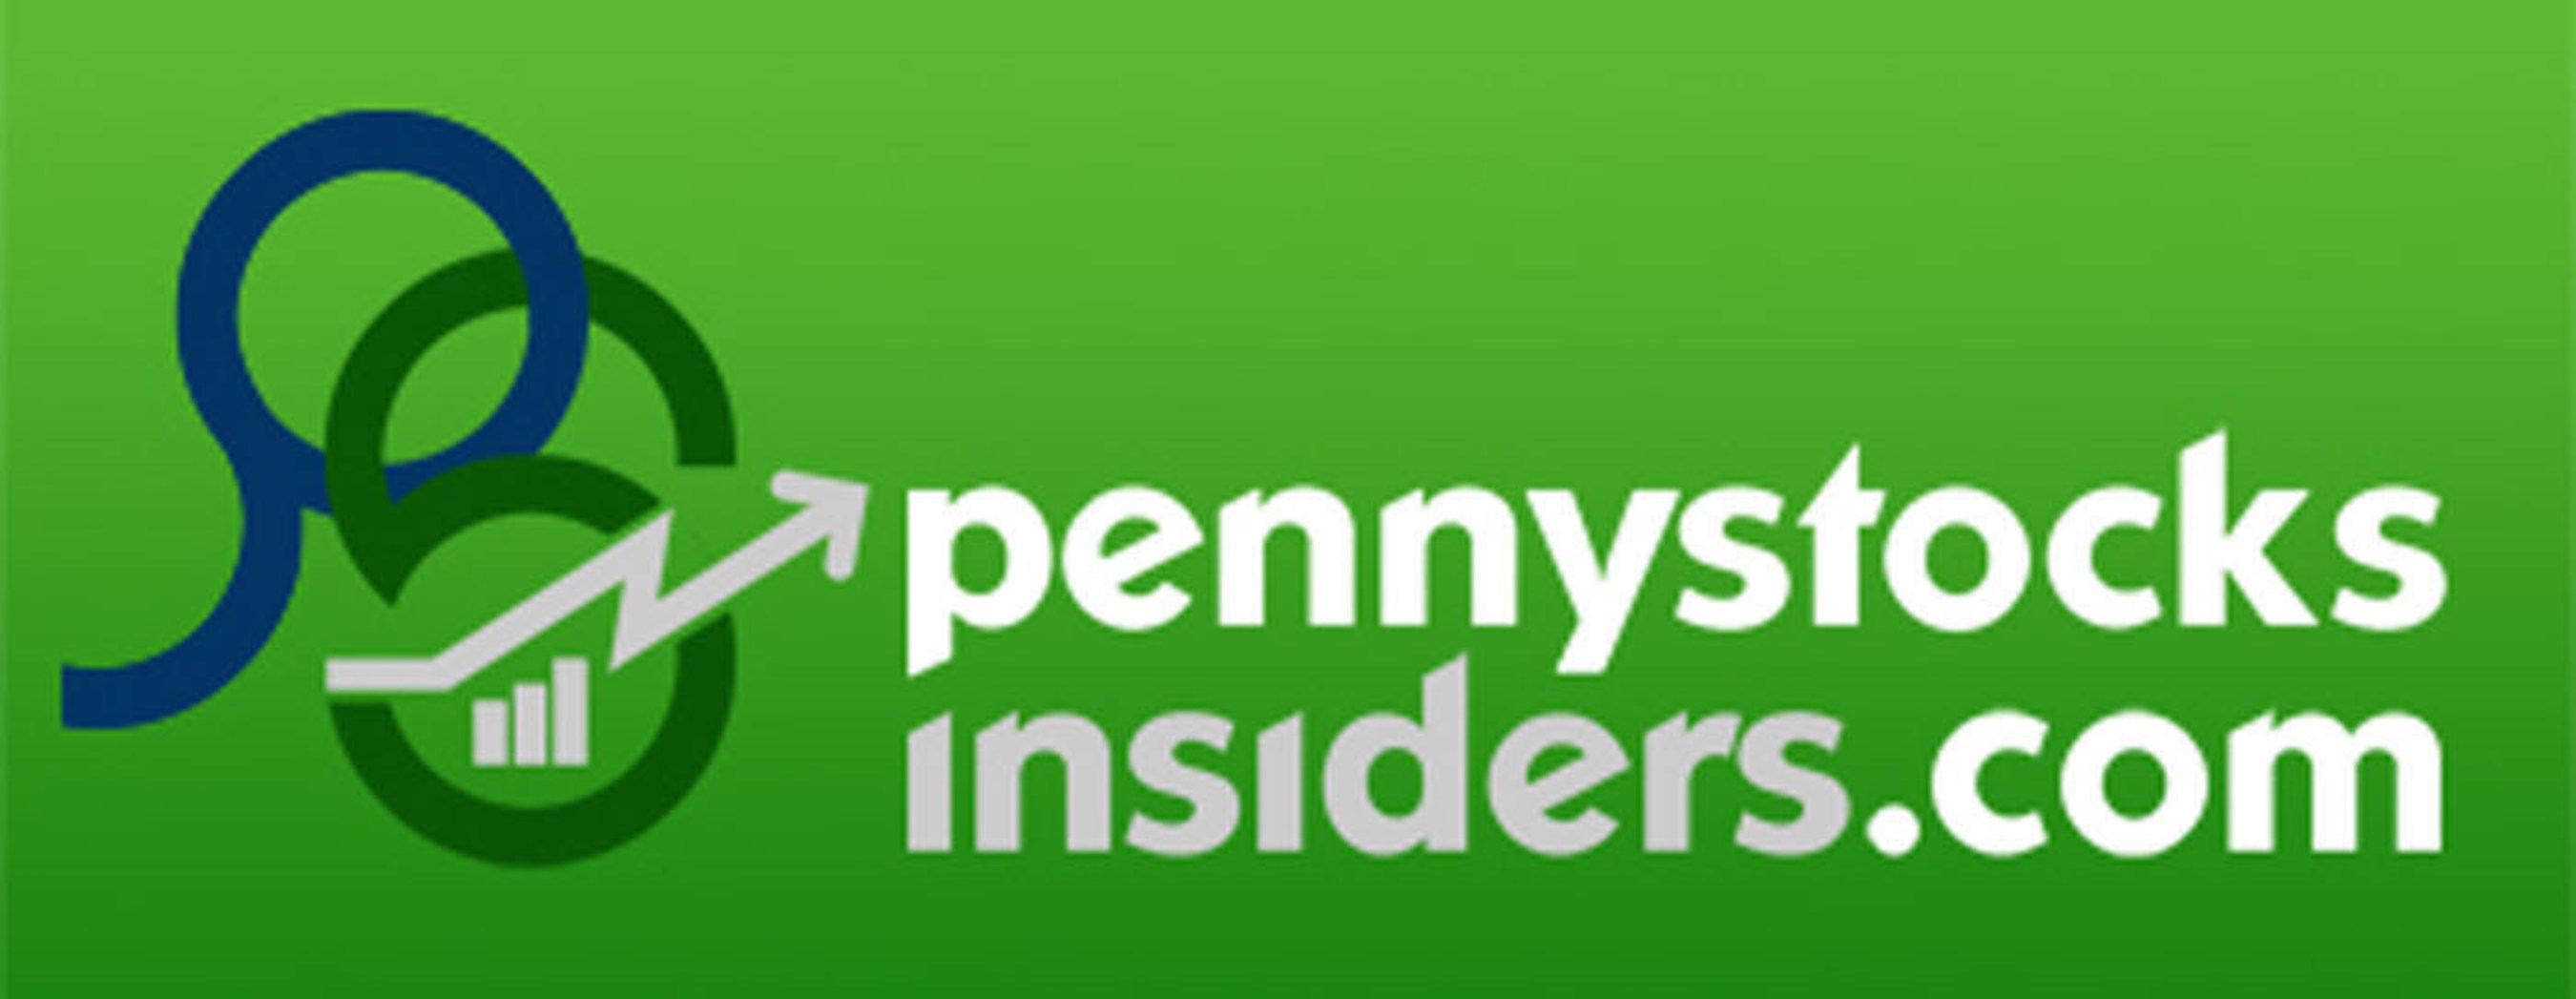 Pennystocksinsiders.com logo